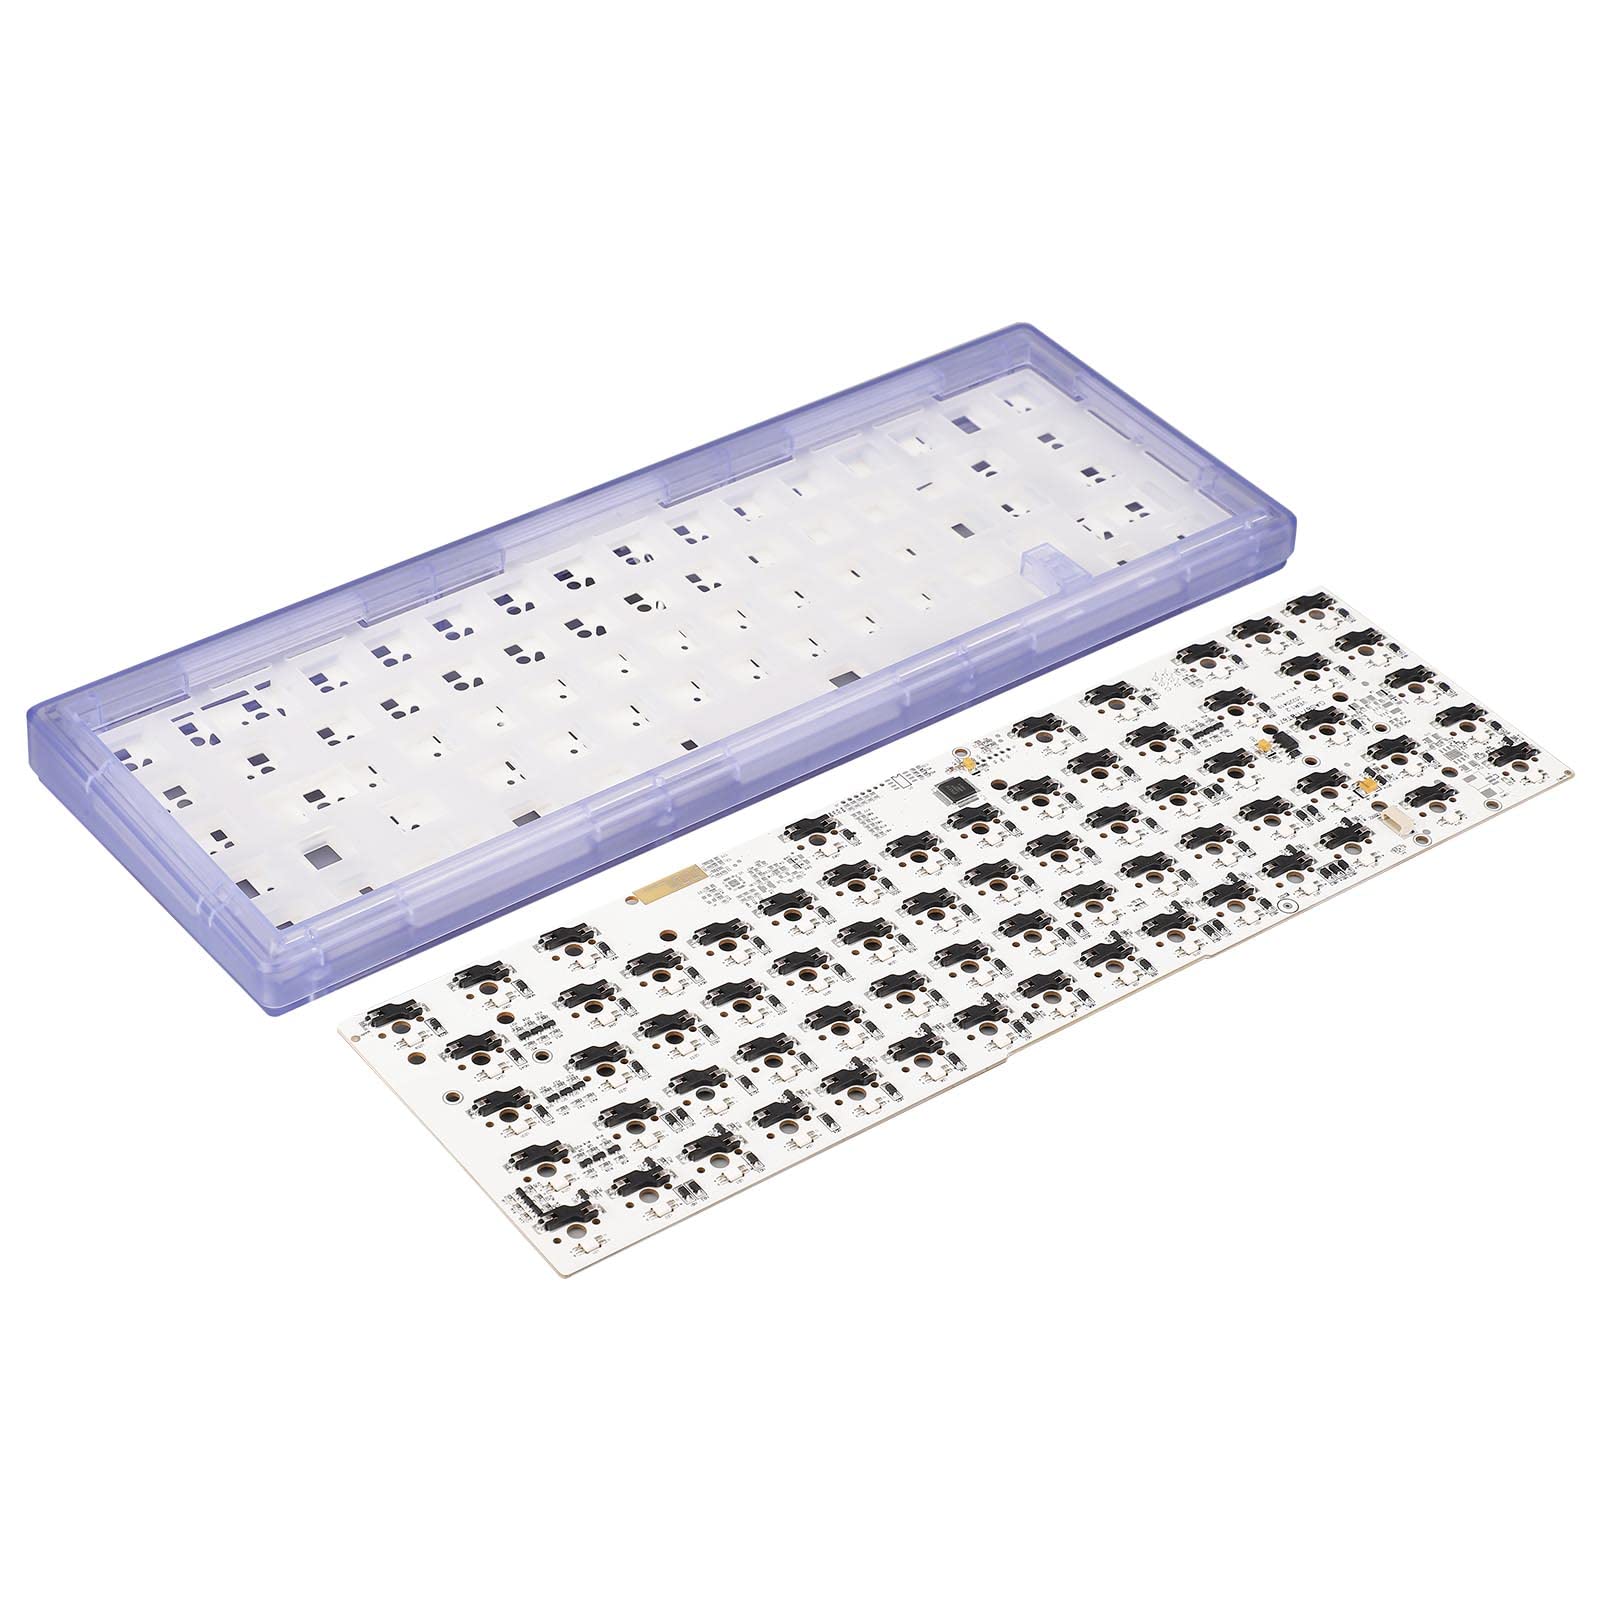 AXOC mechanischer Tastaturständer 5 Pin 3 Pin ABS Shell 67 Key DIY Switch Hot Swap Keyboard Kit (Lila)